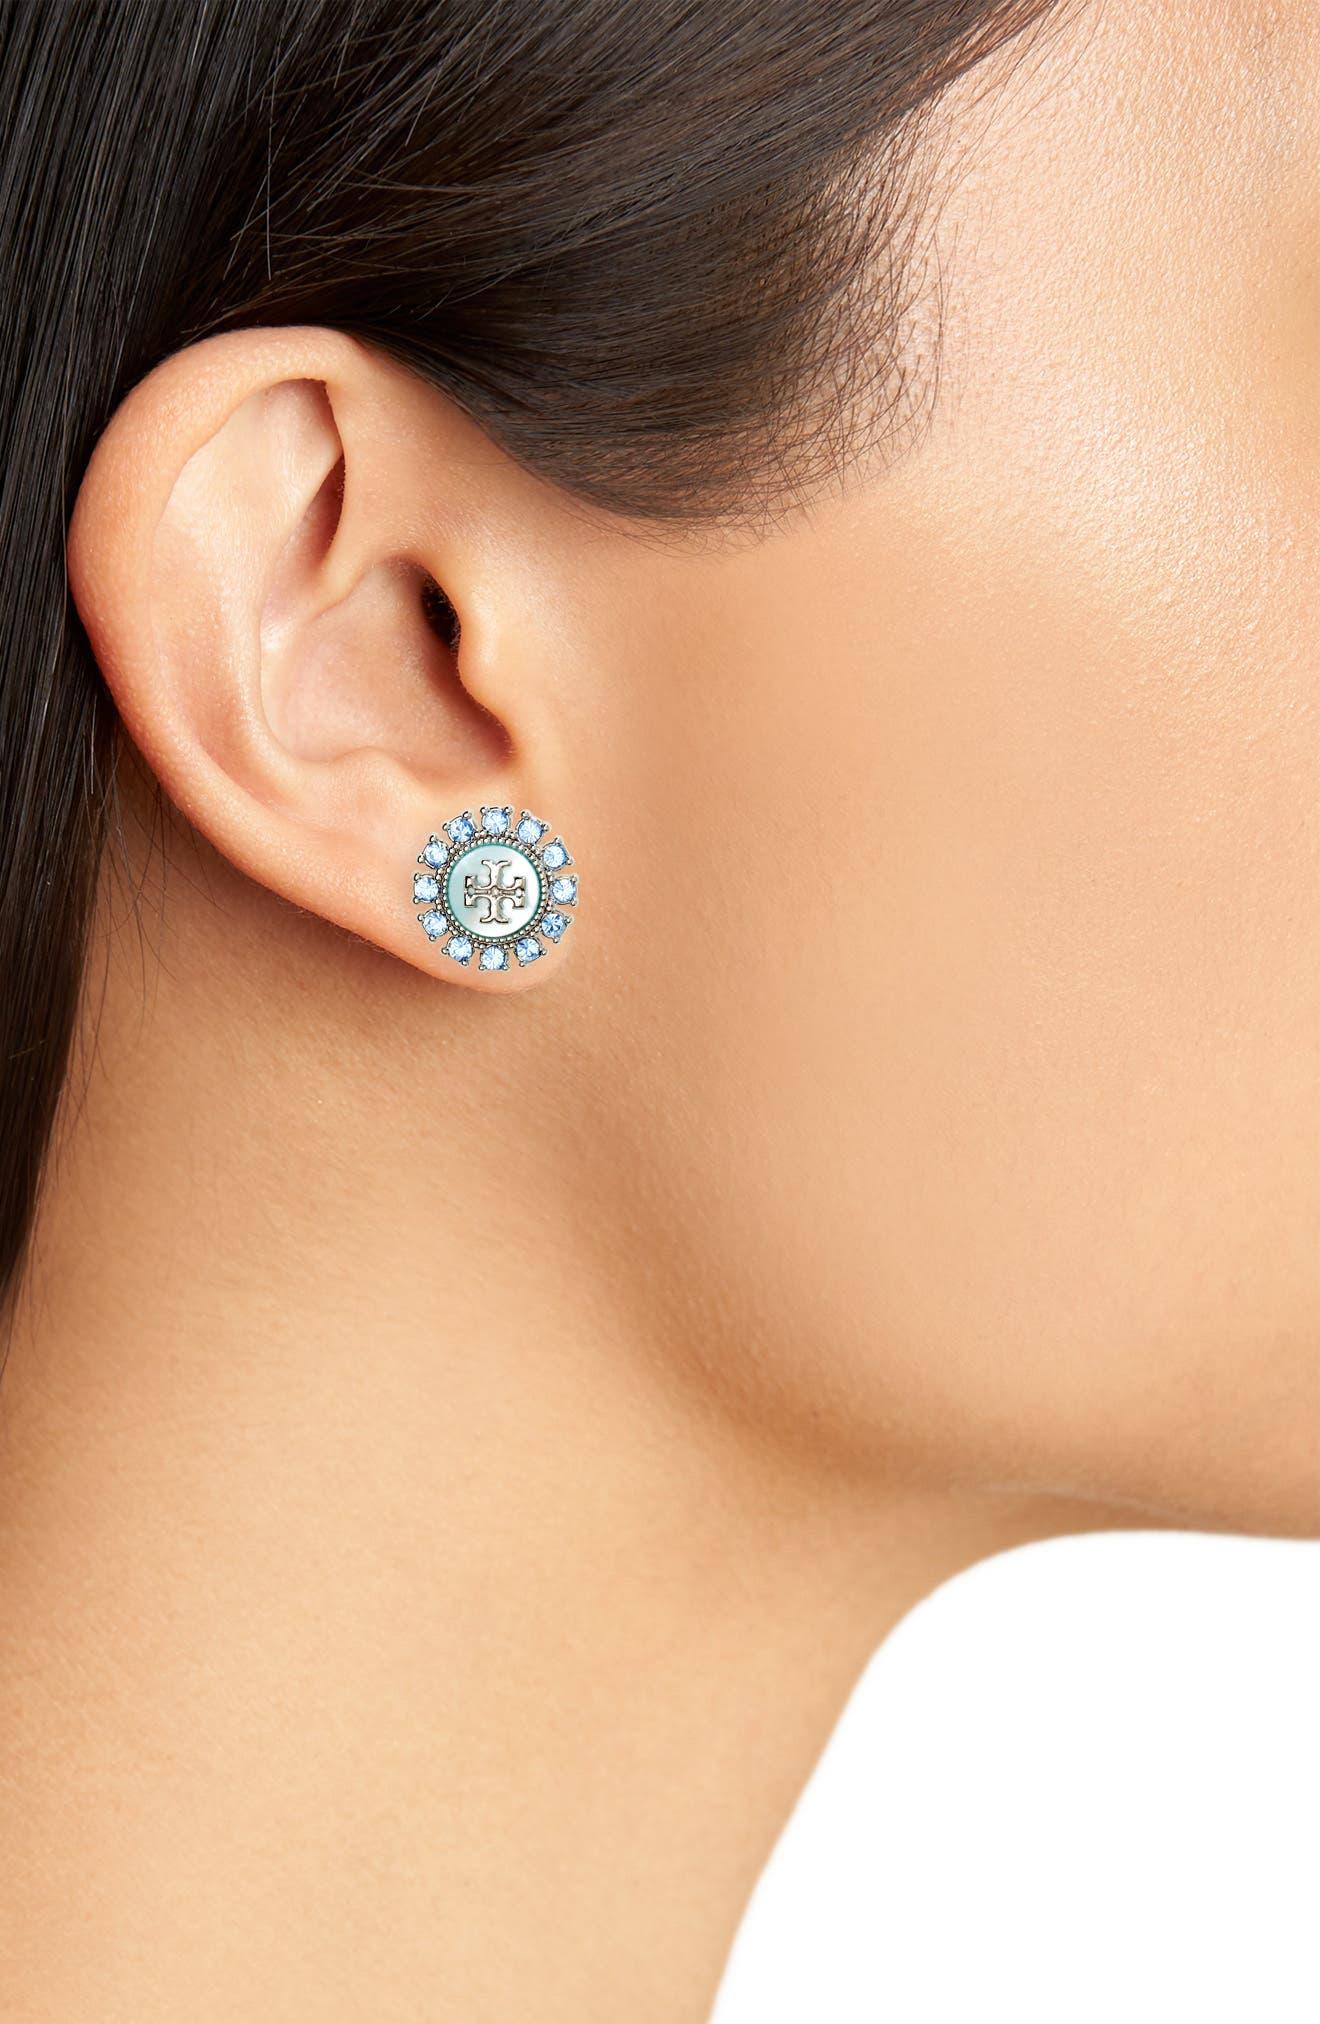 Tory Burch Kira Crystal Stud Earrings in Blue